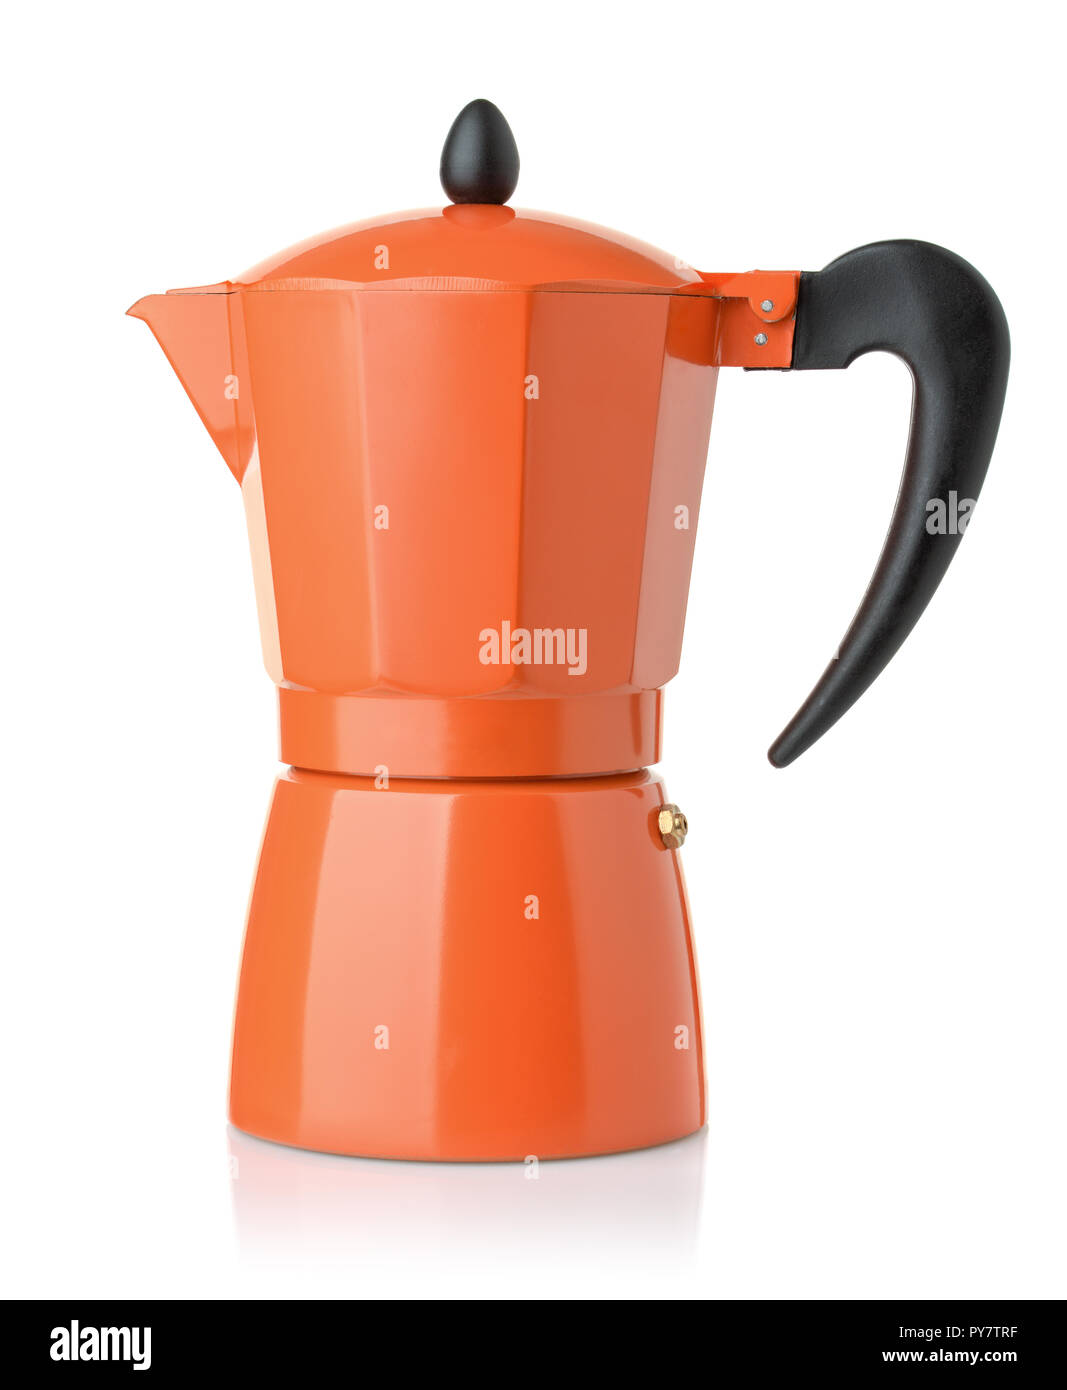 https://c8.alamy.com/comp/PY7TRF/side-view-of-orange-stovetop-espresso-coffee-maker-isolated-PY7TRF.jpg